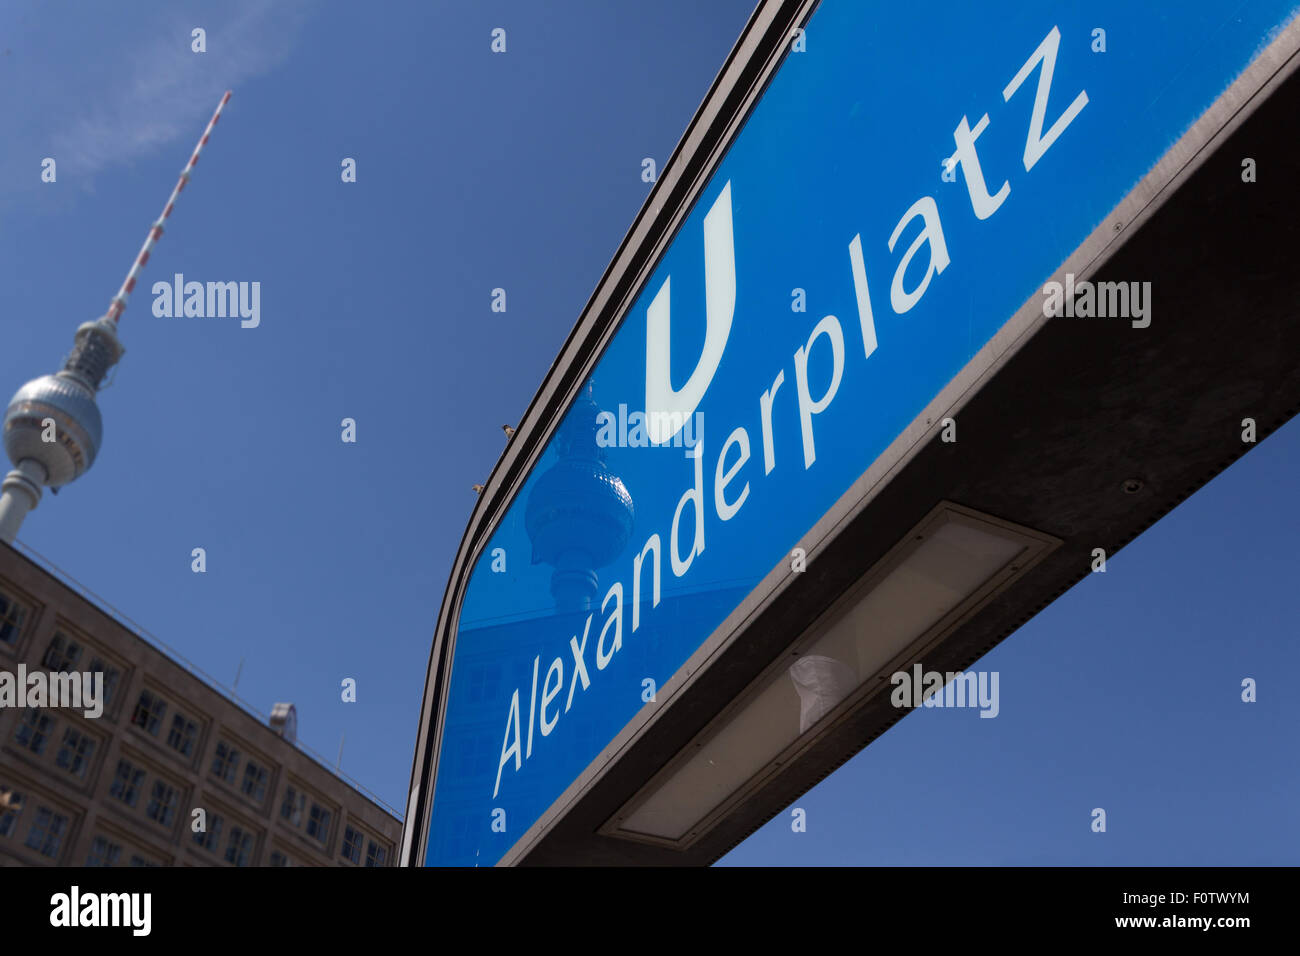 Alexanderplatz, tv tower, berlin, germany - subway station sign Stock Photo